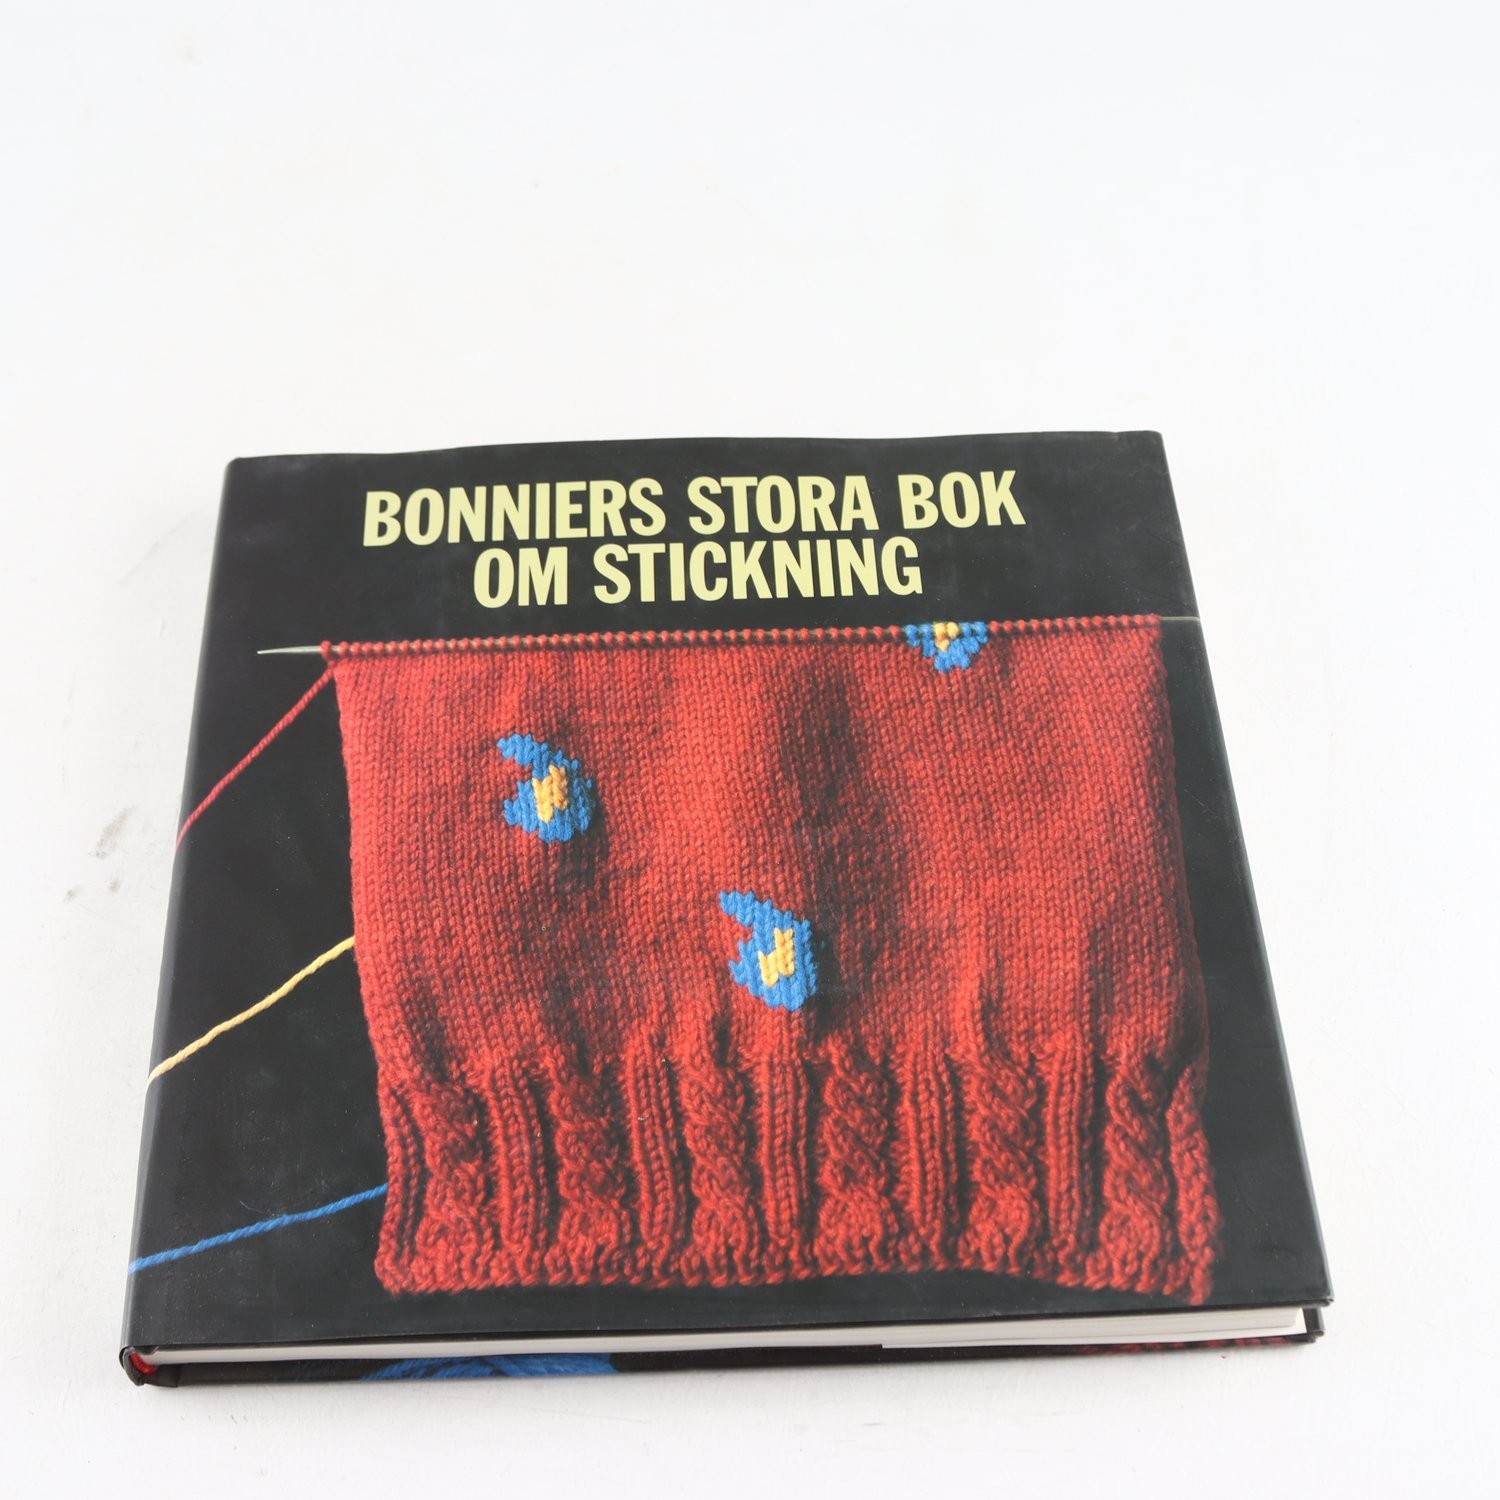 Bonniers stora bok om stickning